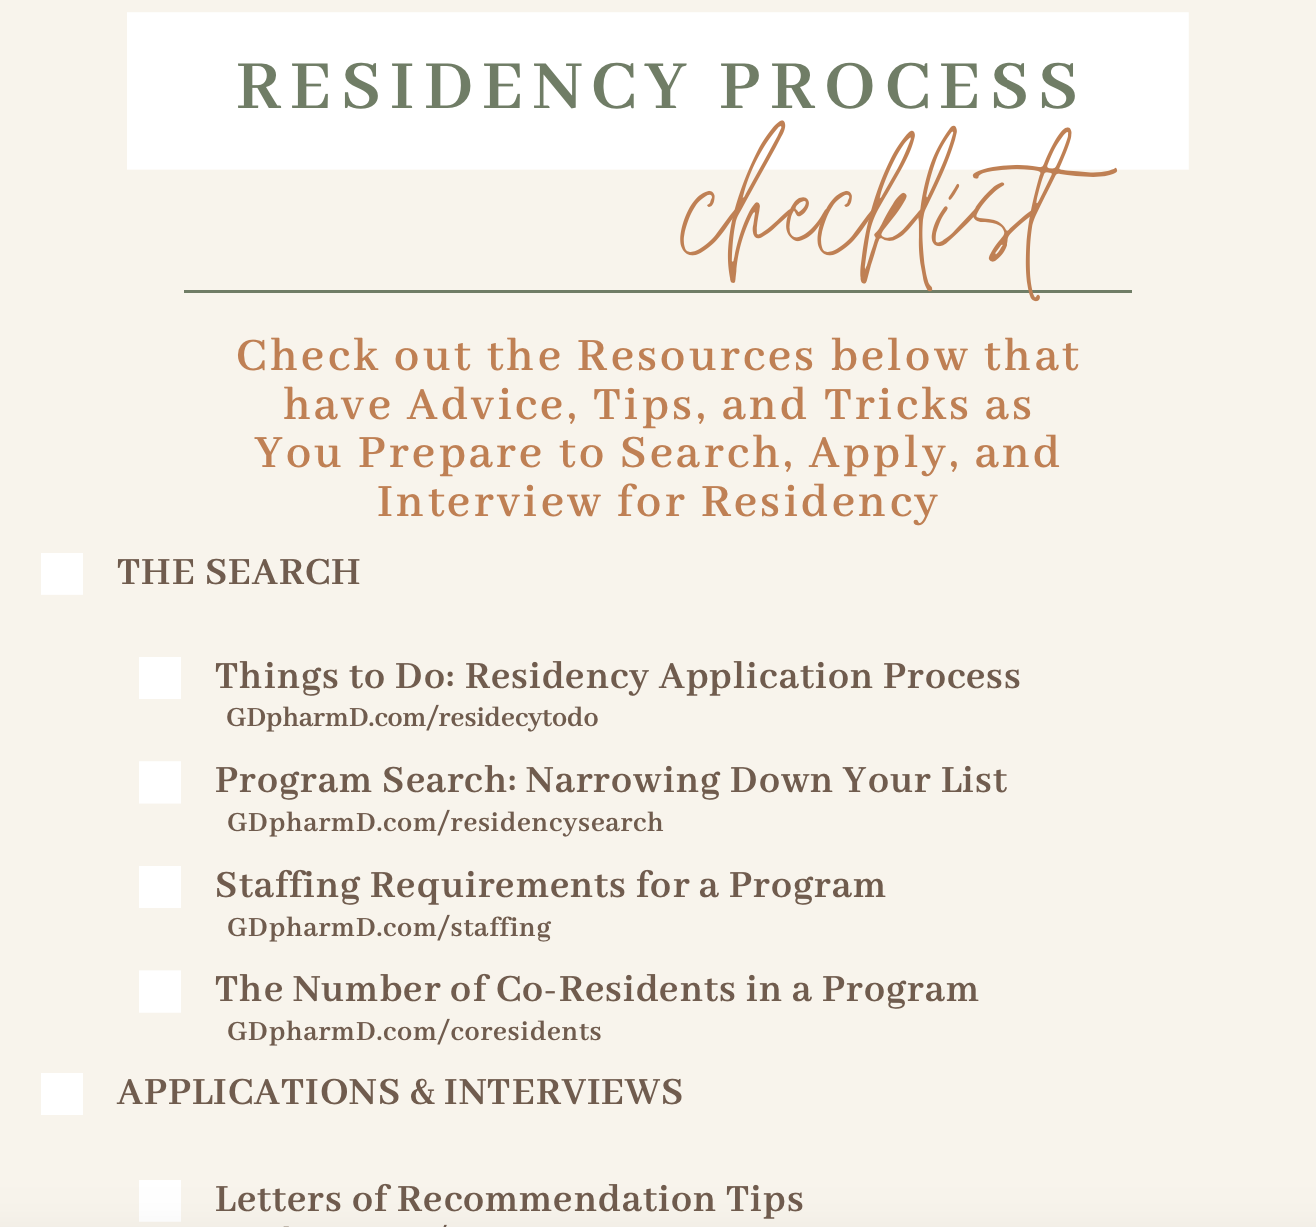 Residency Process Checklist: Advice, Tips, and Tricks